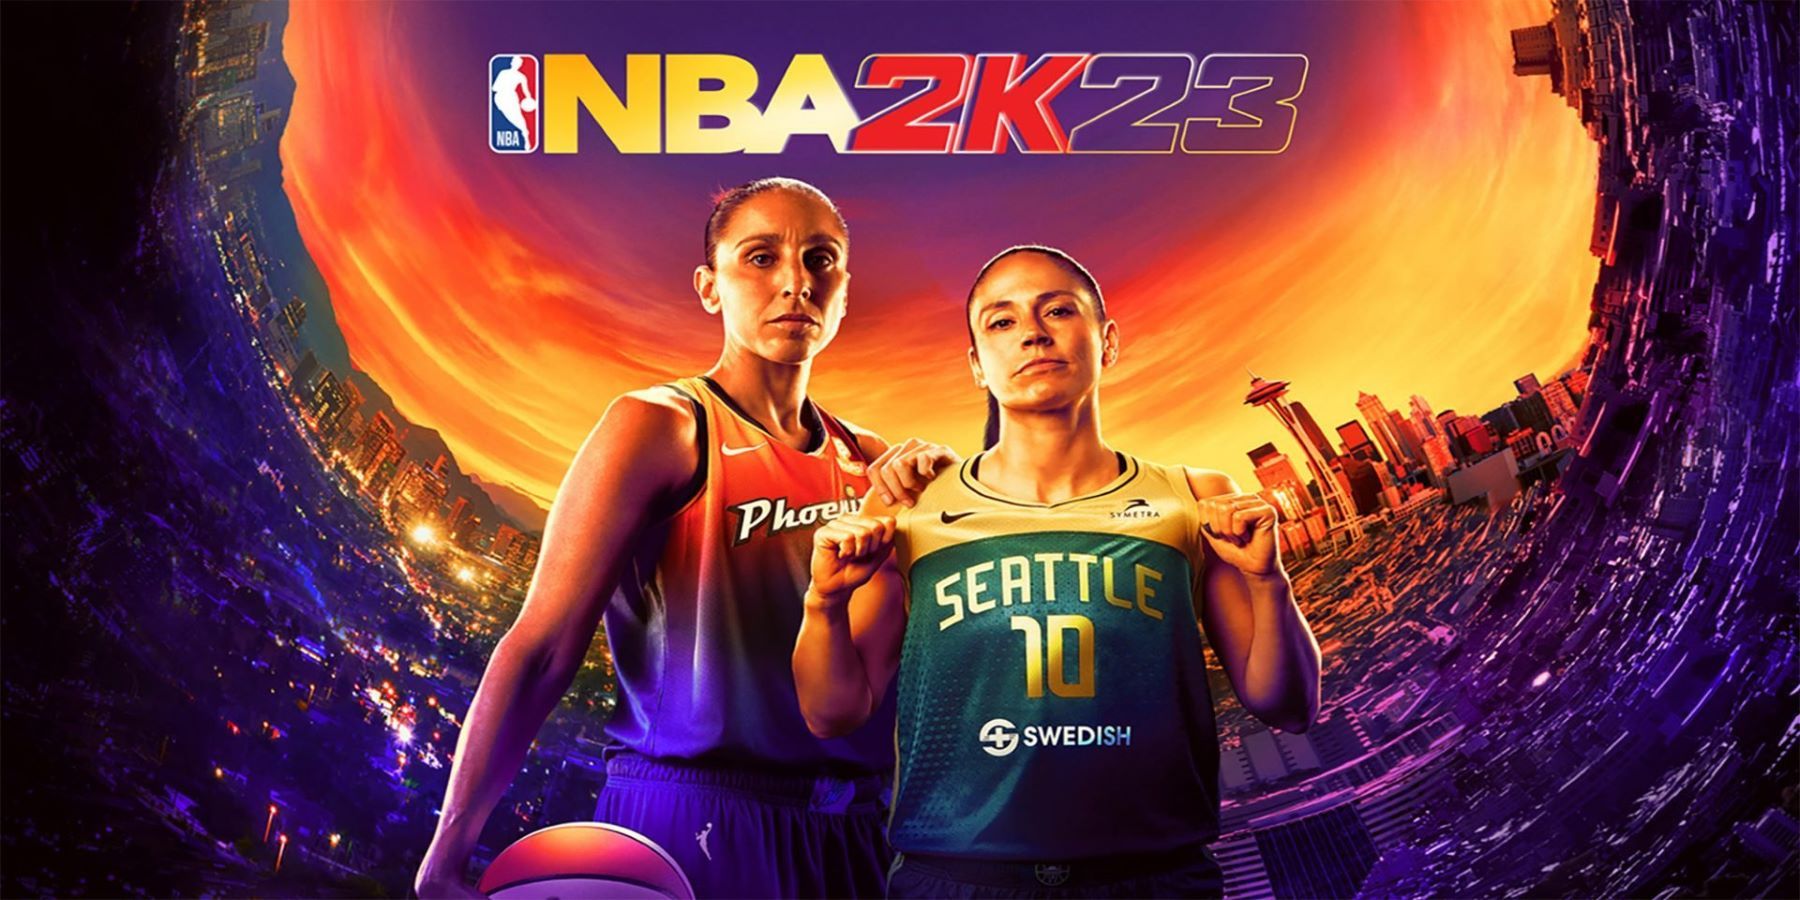 WNBA edition cover for NBA 2K23 featuring Sue Bird and Diana Taurasi